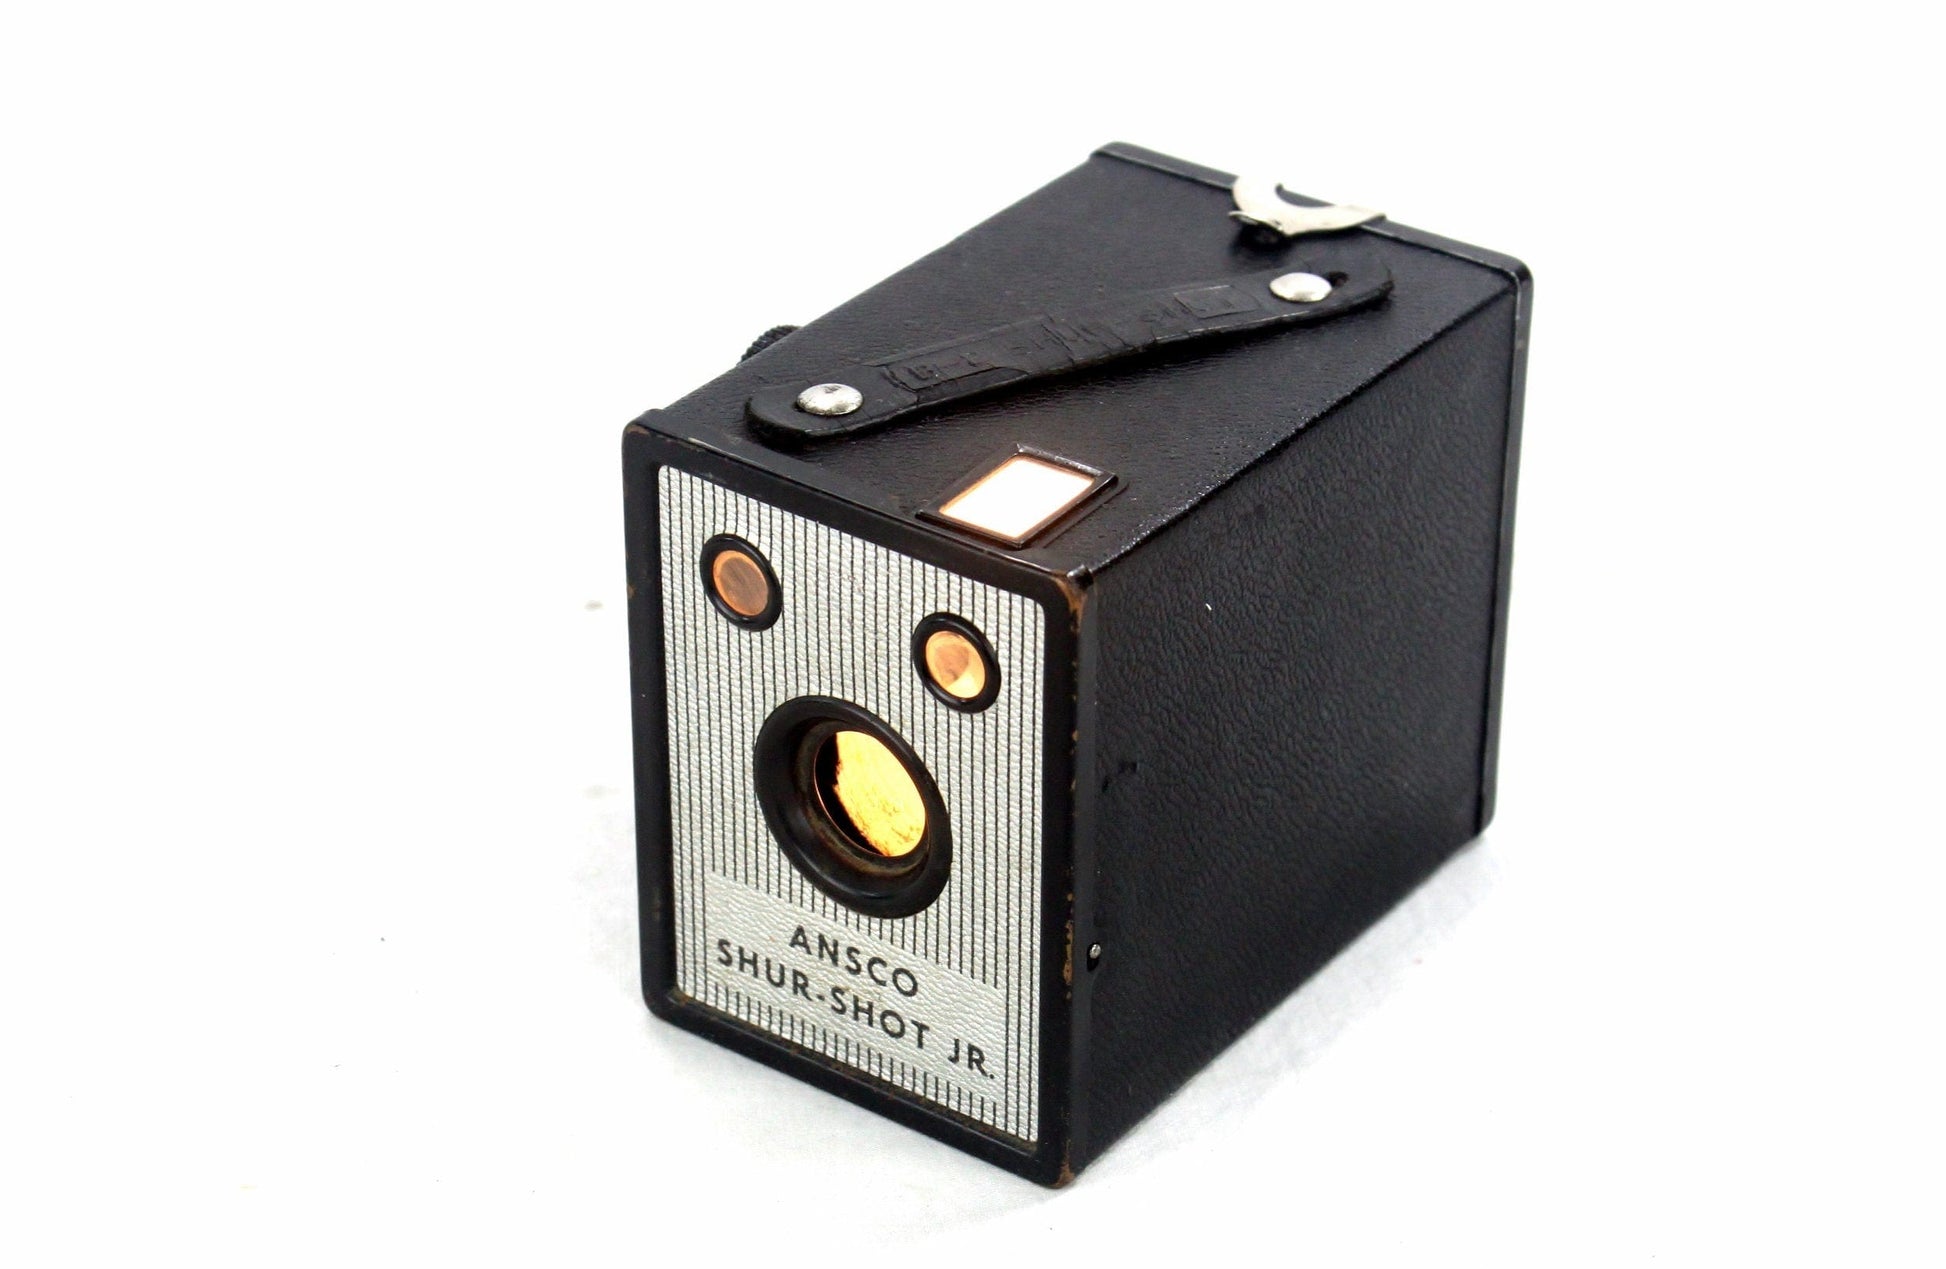 LightAndTimeArt Camera Lamp Mini Vintage LED Camera Lamp - Home Theater Lighting - Vintage Décor